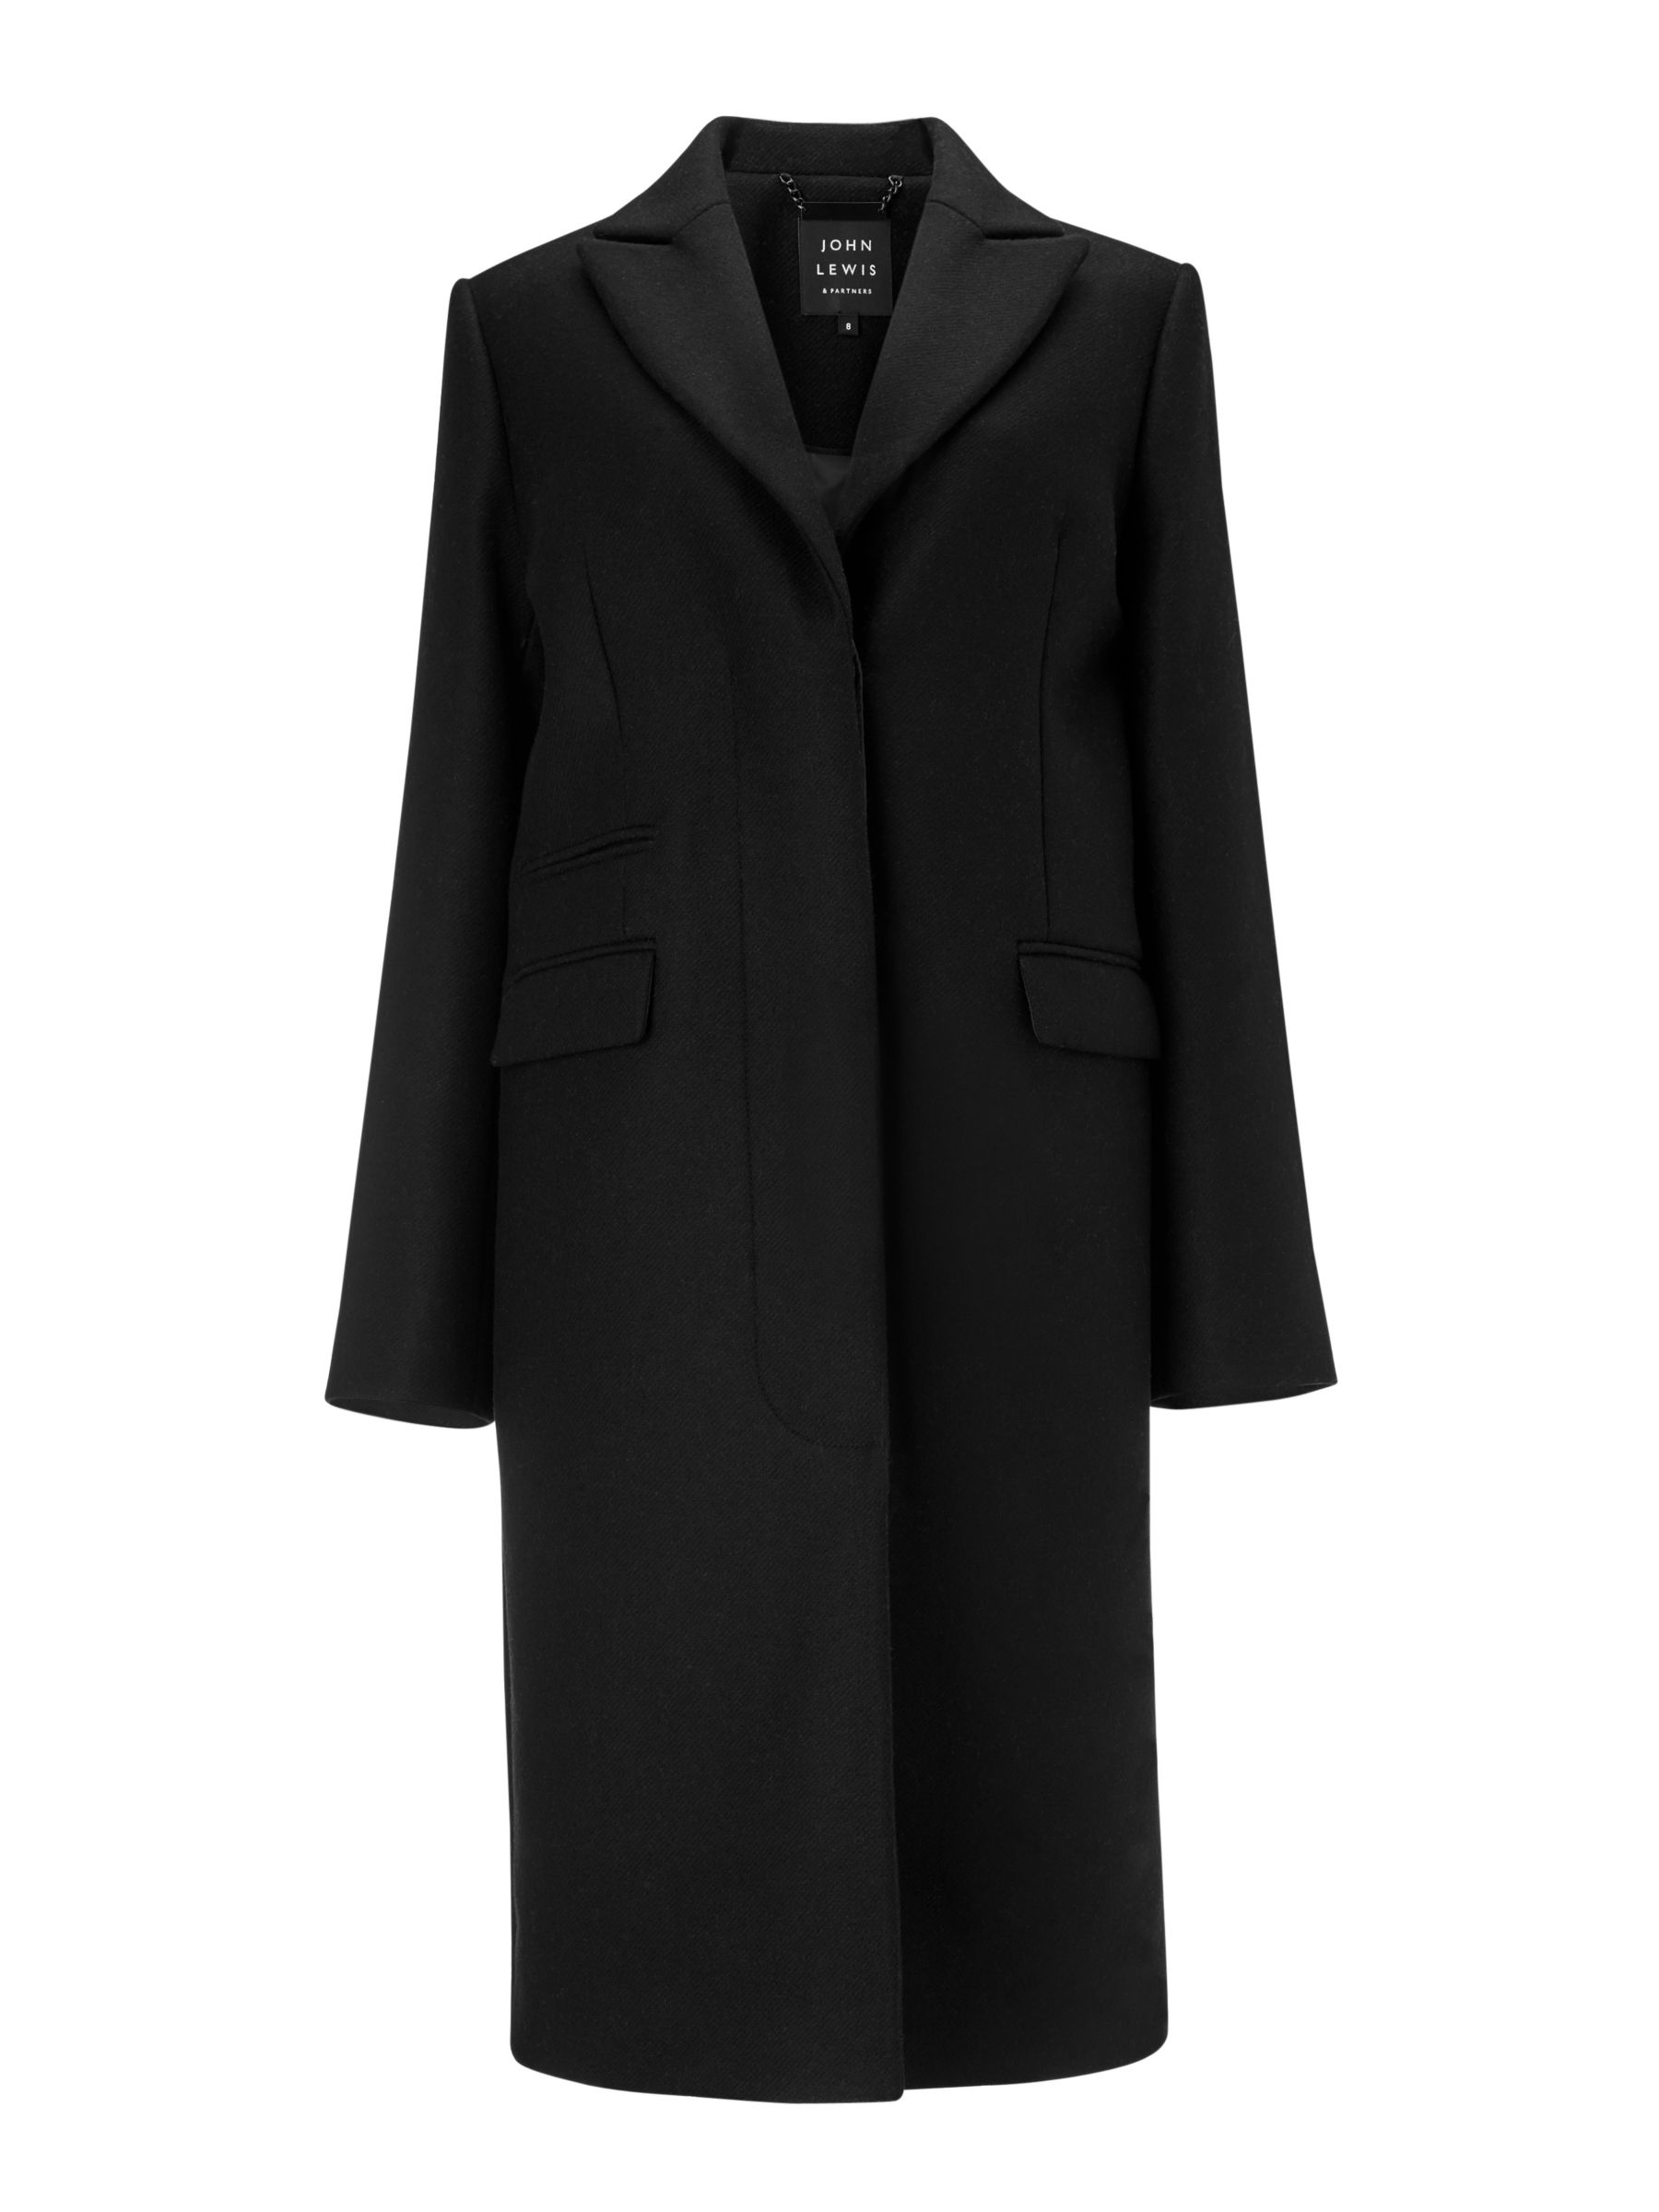 John Lewis & Partners Crombie Coat, Black